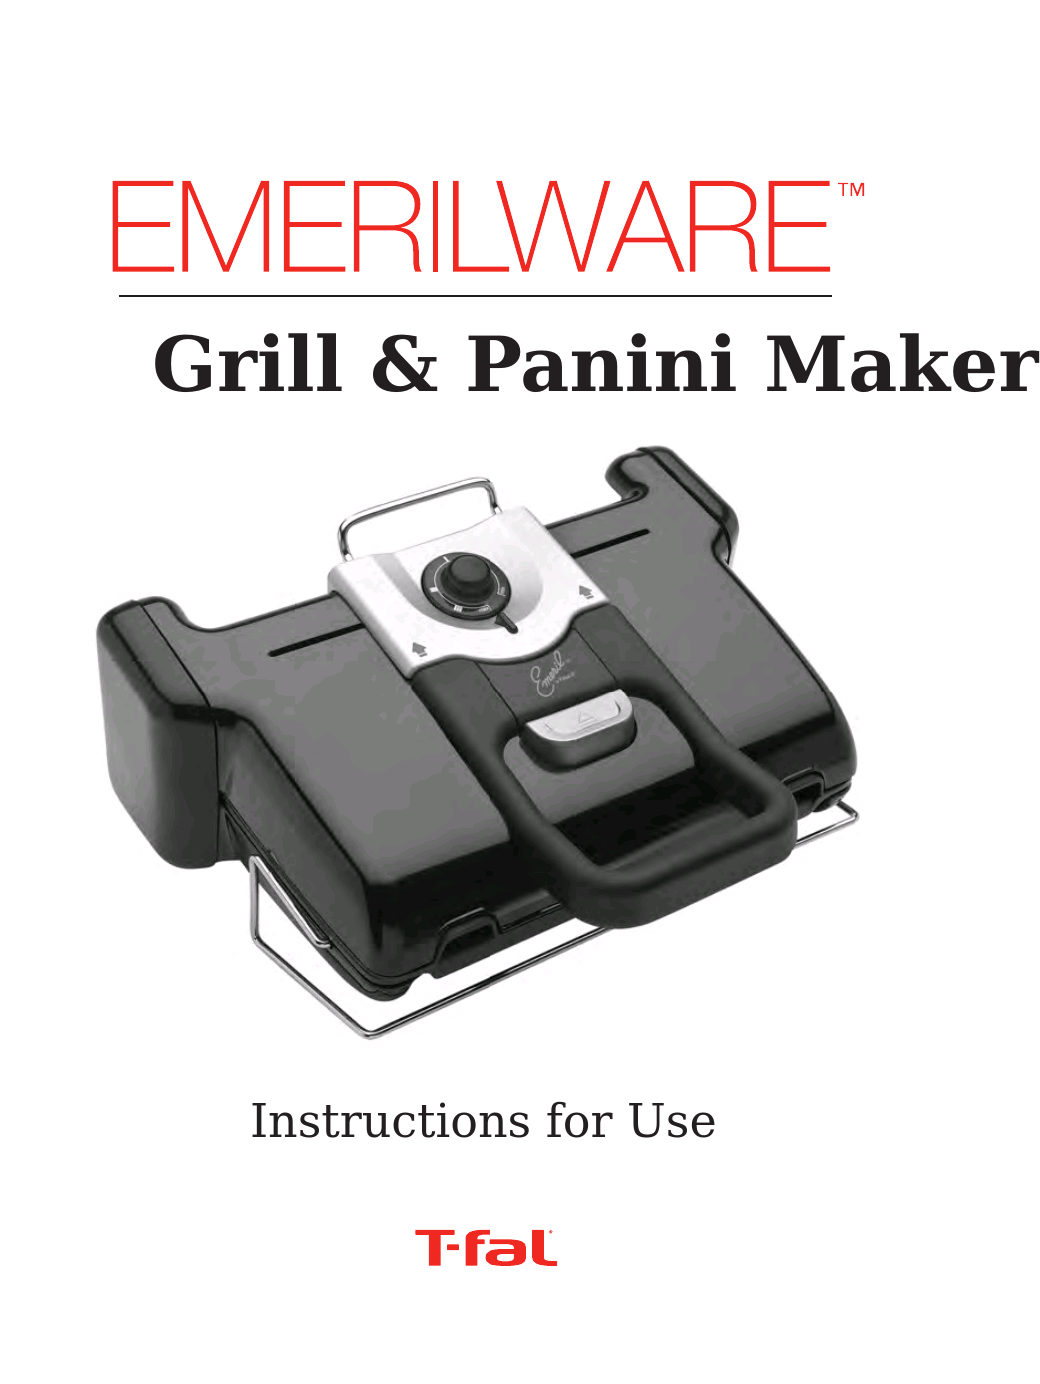 Emerilware Use Grill & Panini Maker